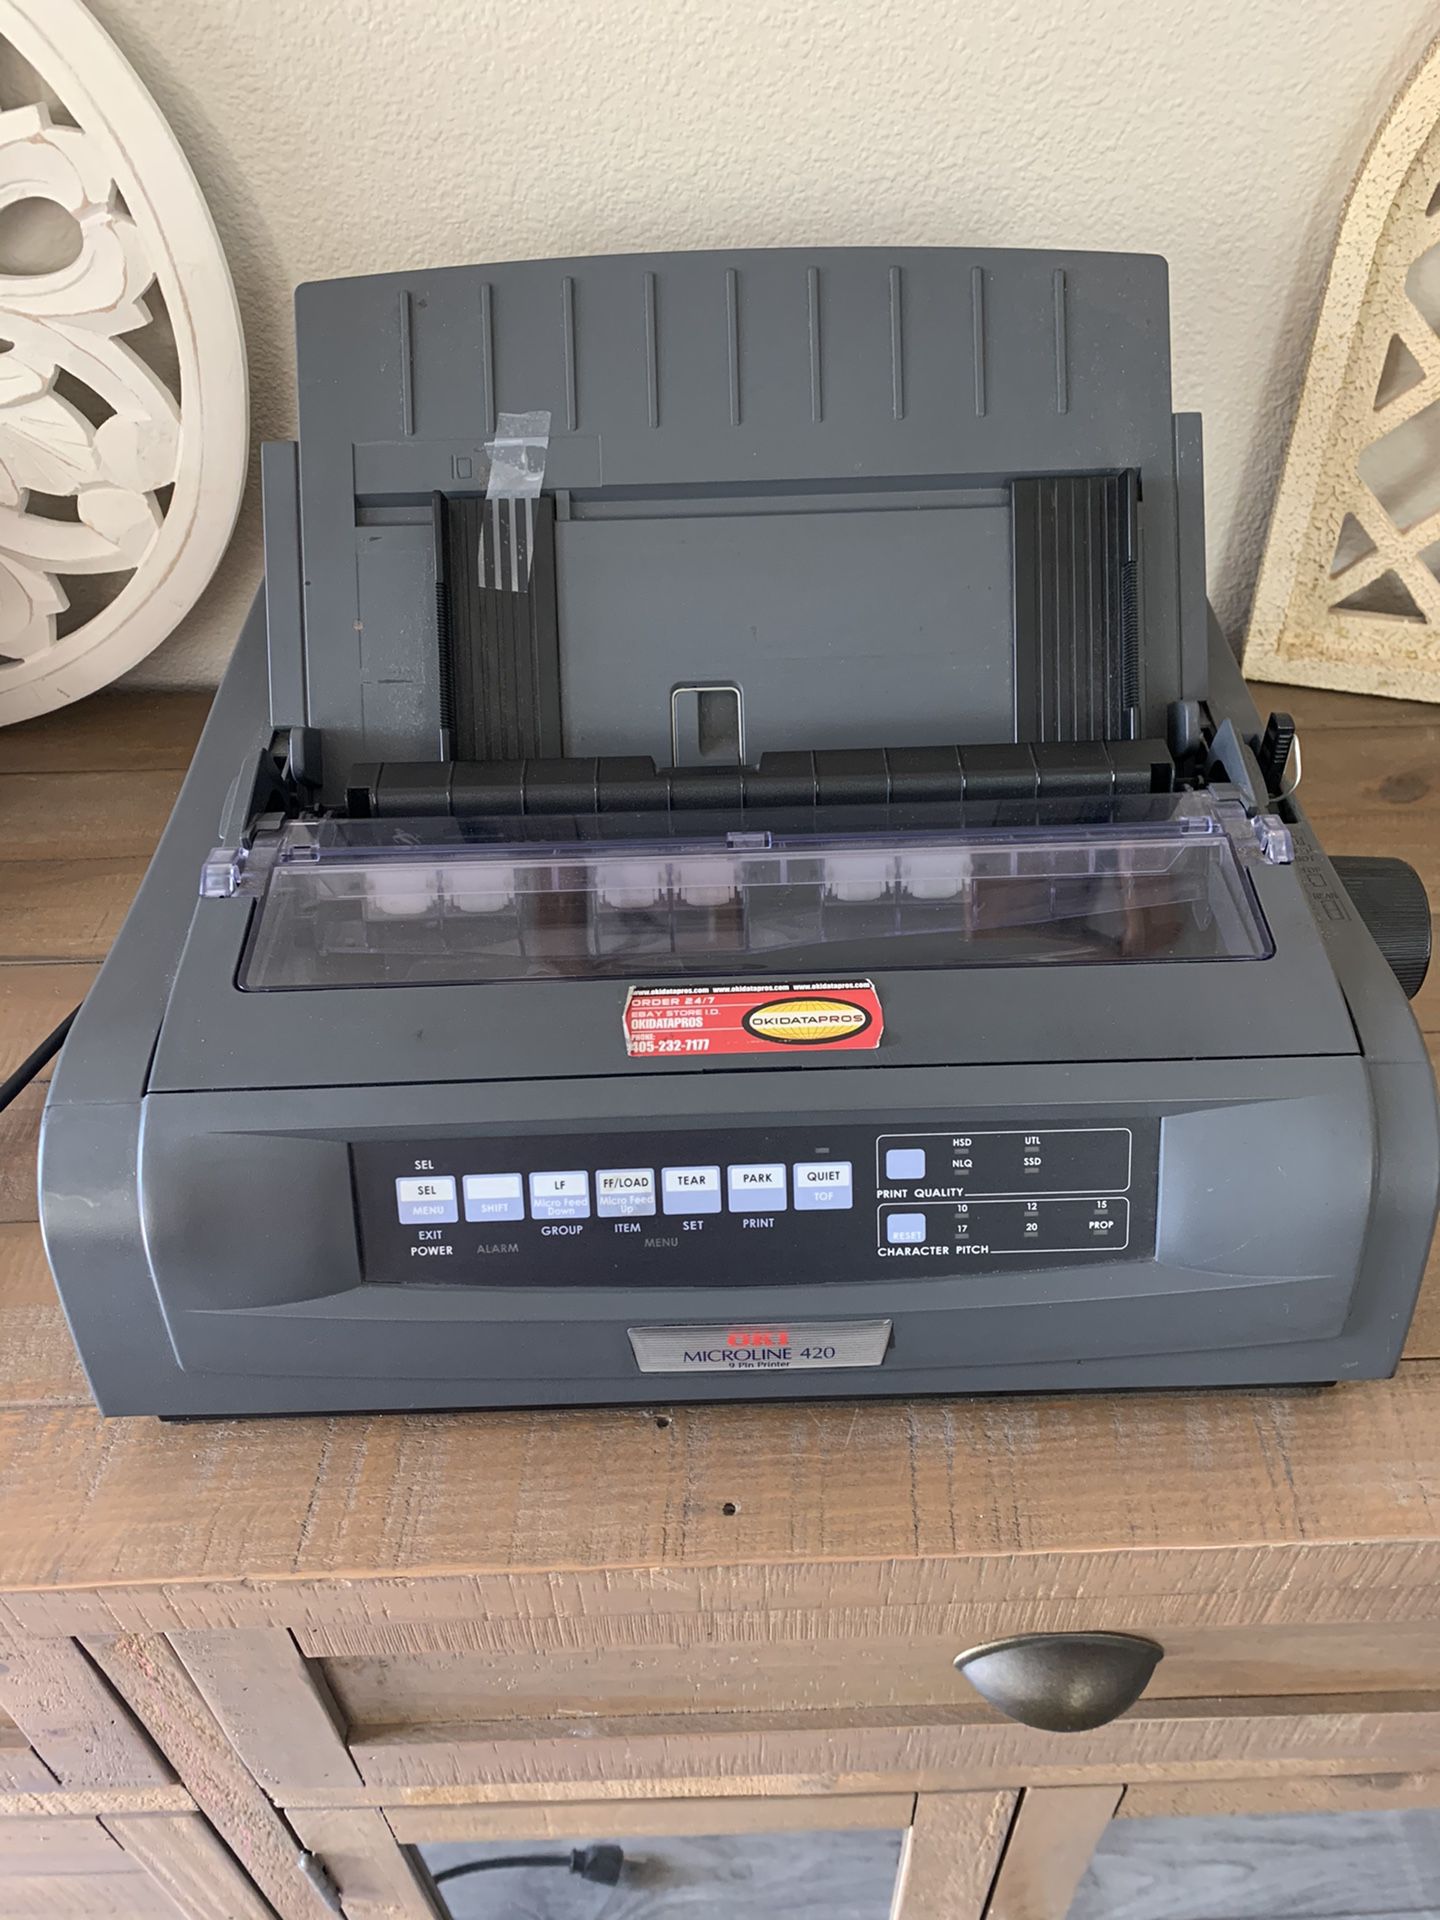 OKI Microline 420 9 pin printer